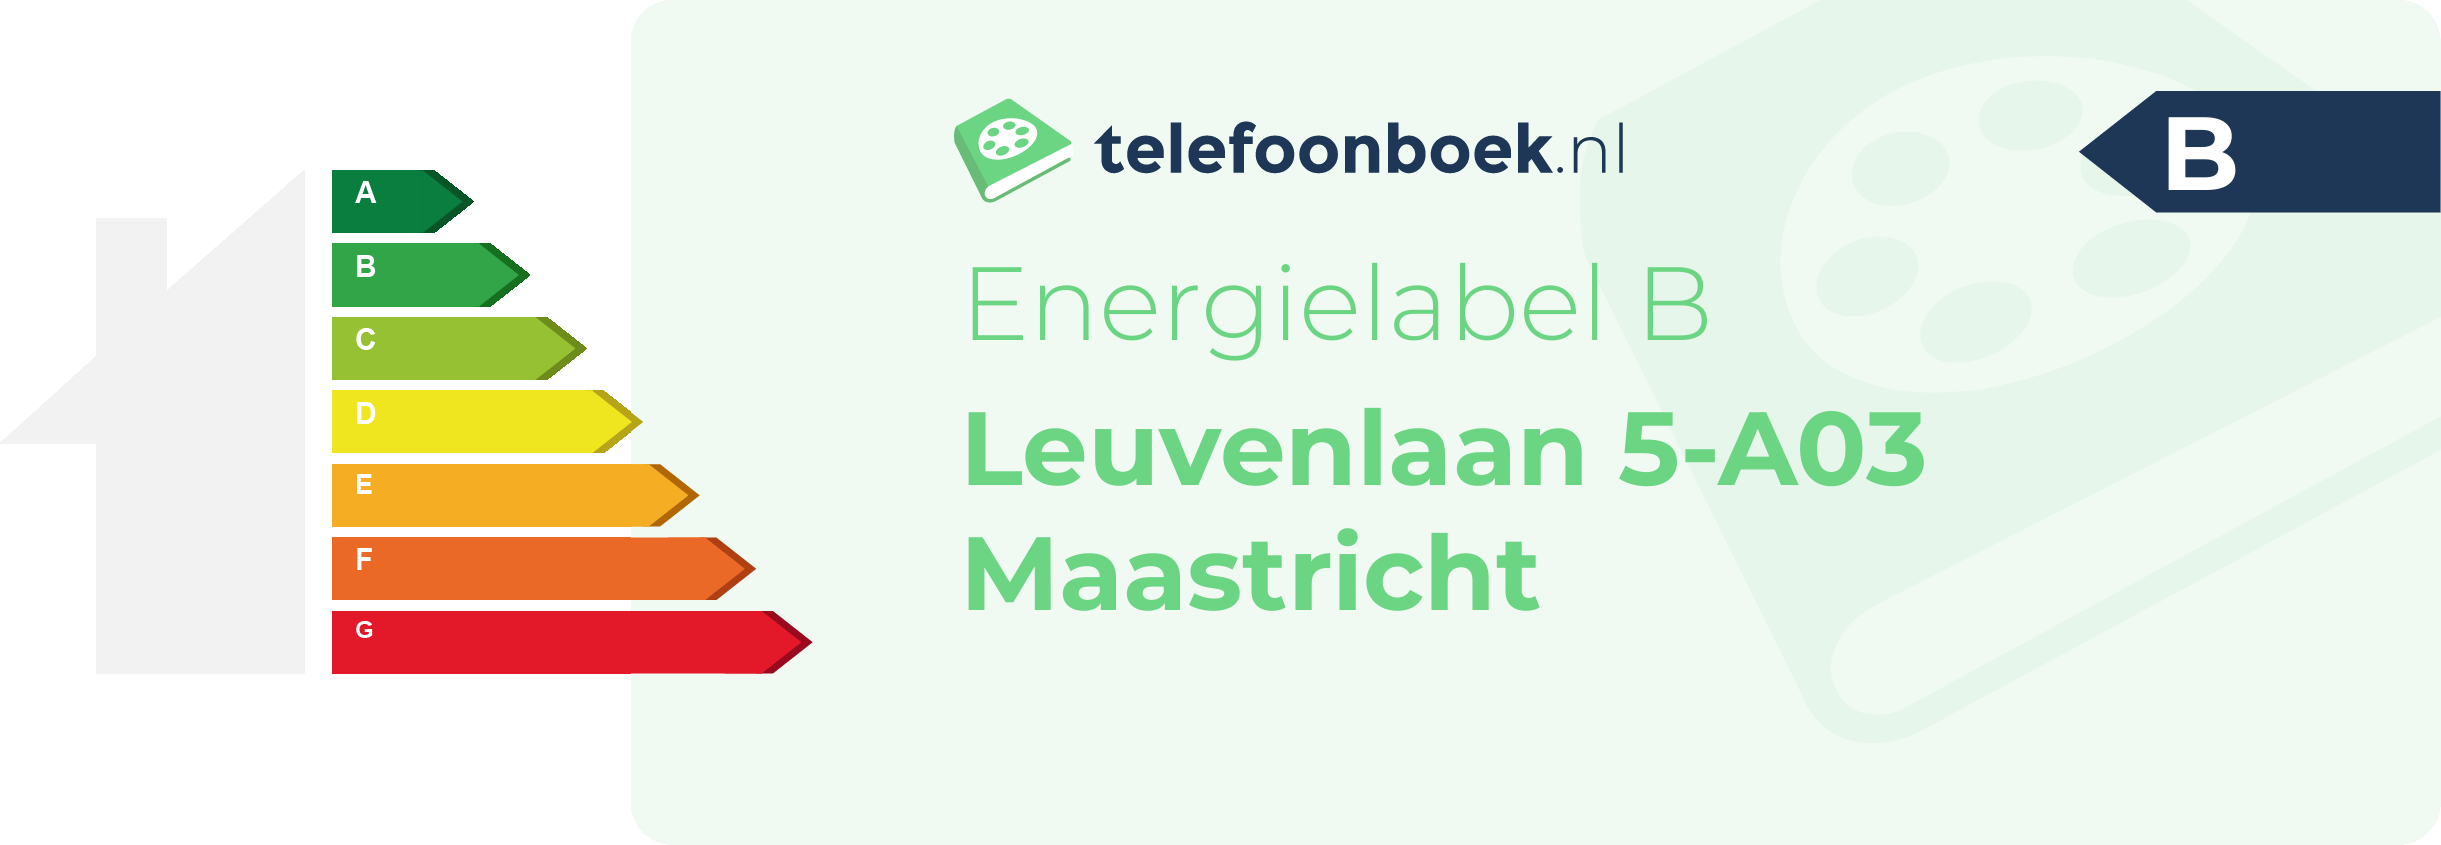 Energielabel Leuvenlaan 5-A03 Maastricht